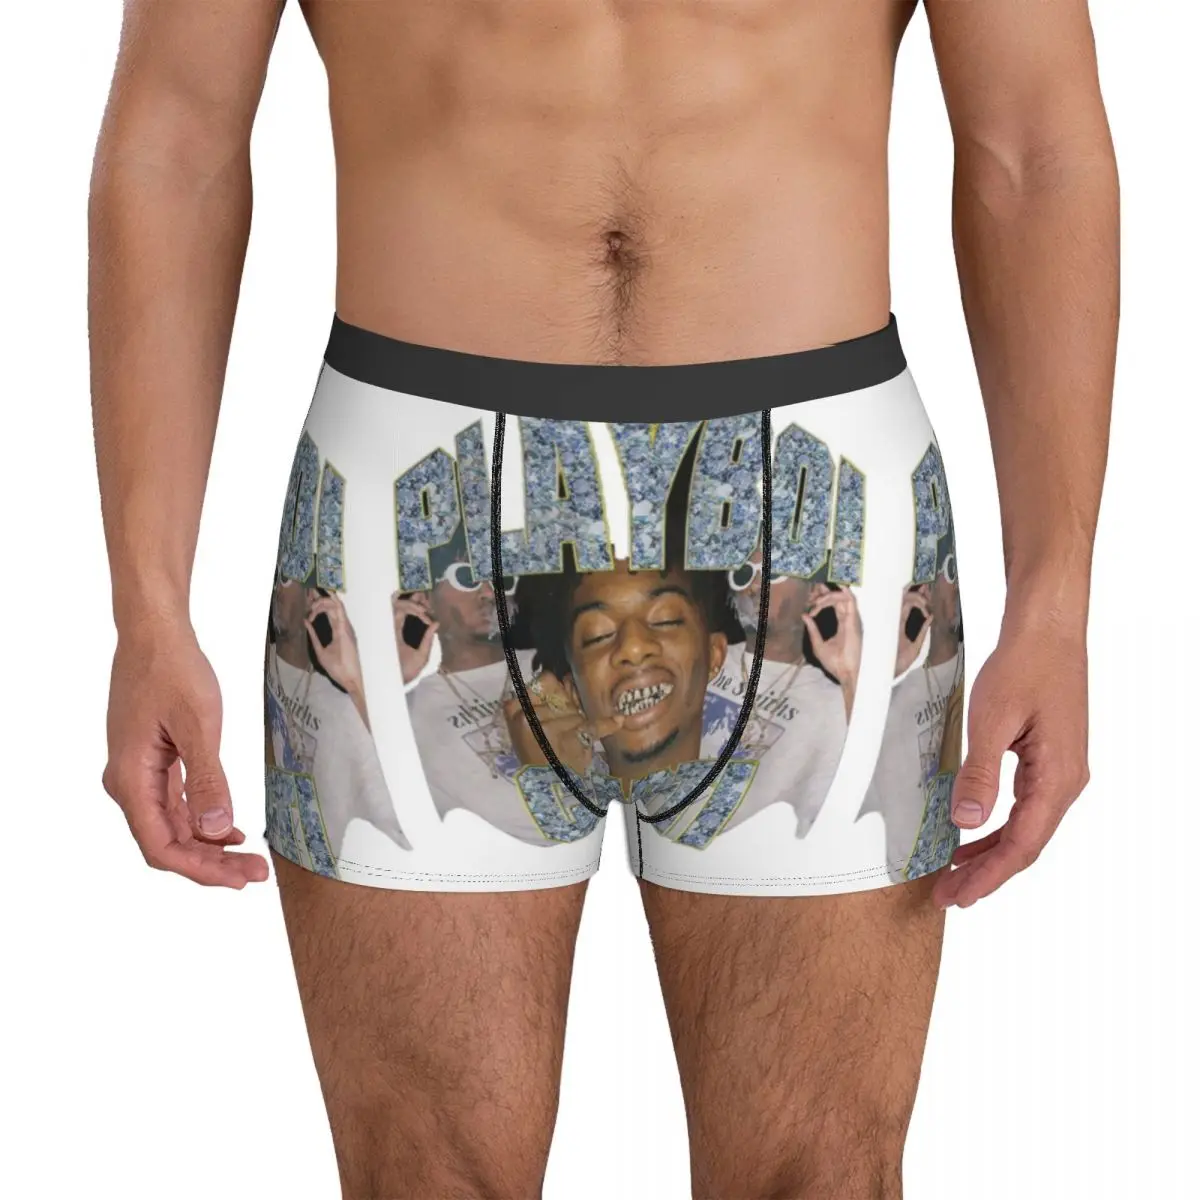 Untitled Underwear playboi carti galaxy Man Underpants Custom Cute Trunk Hot Boxer Brief Plus Size